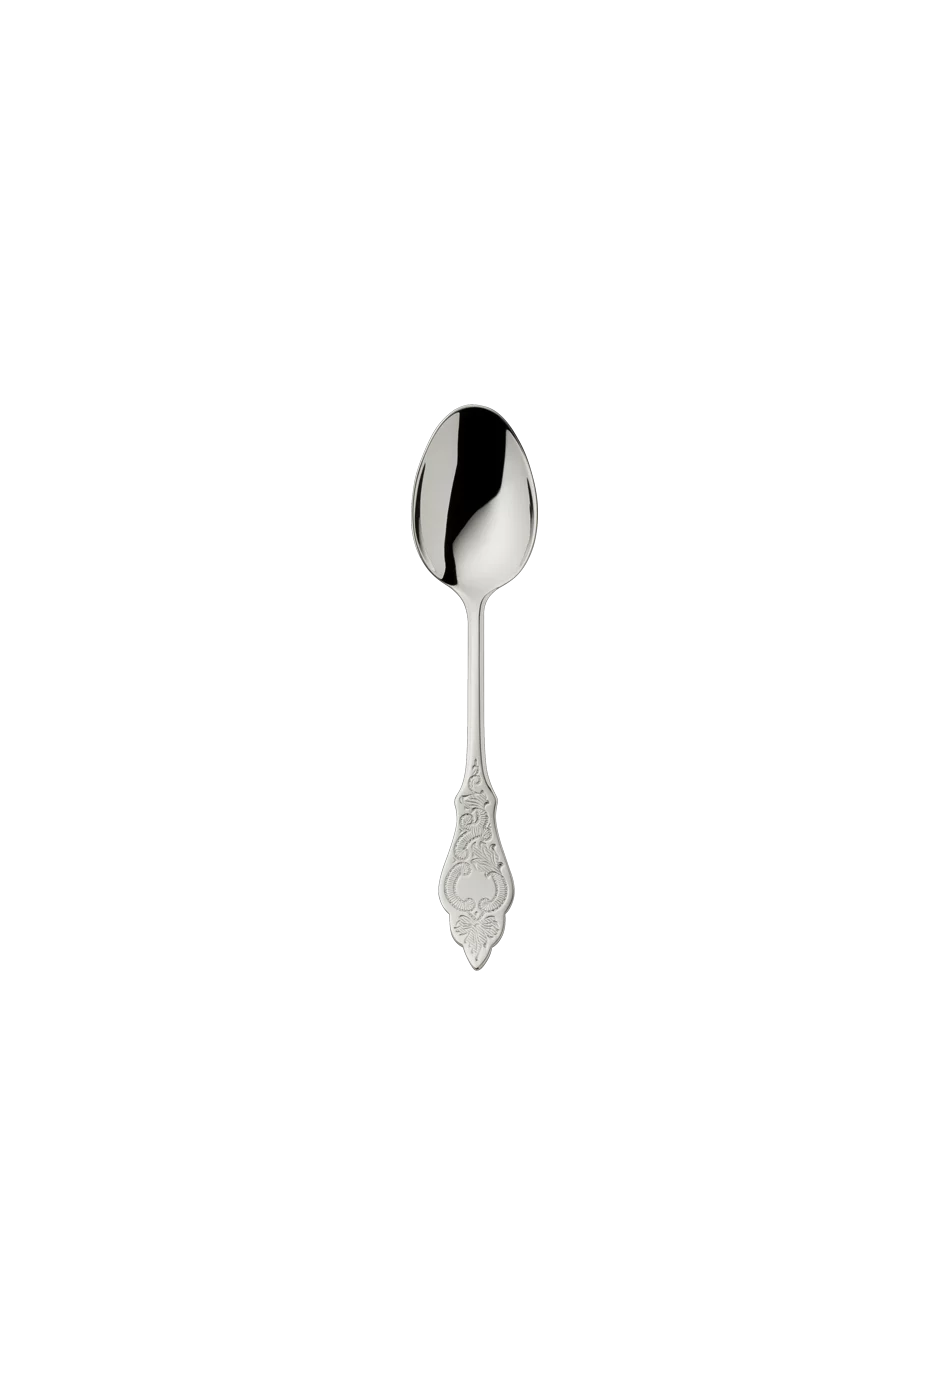 Ostfriesen Tea Spoon 12,0 Cm (150g massive silverplated)